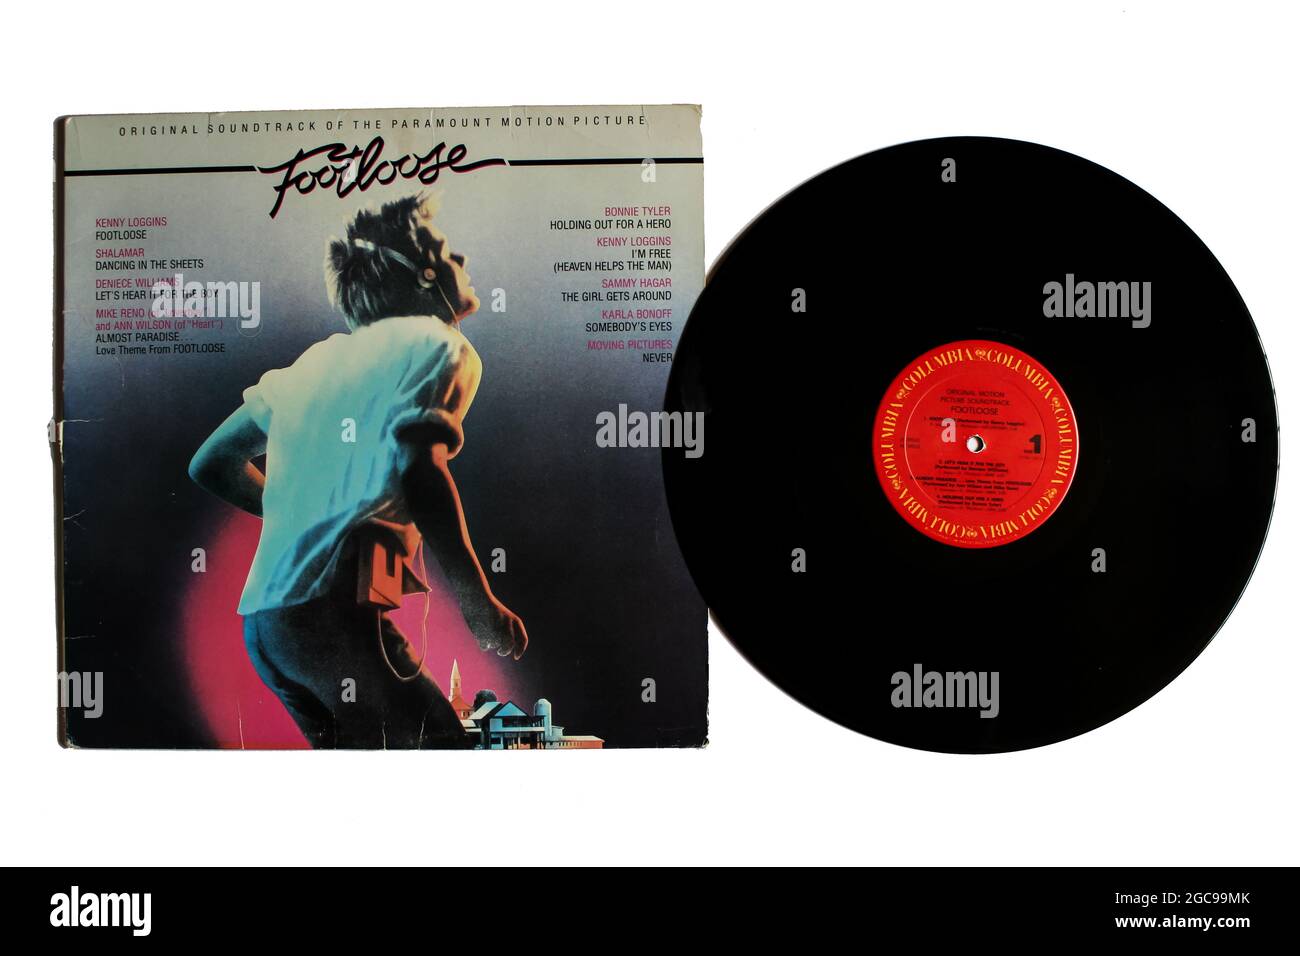 Footloose Original Soundtrack of the Paramount Motion Picture Footloose. Music album on vinyl record LP disc. Album cover Stock Photo